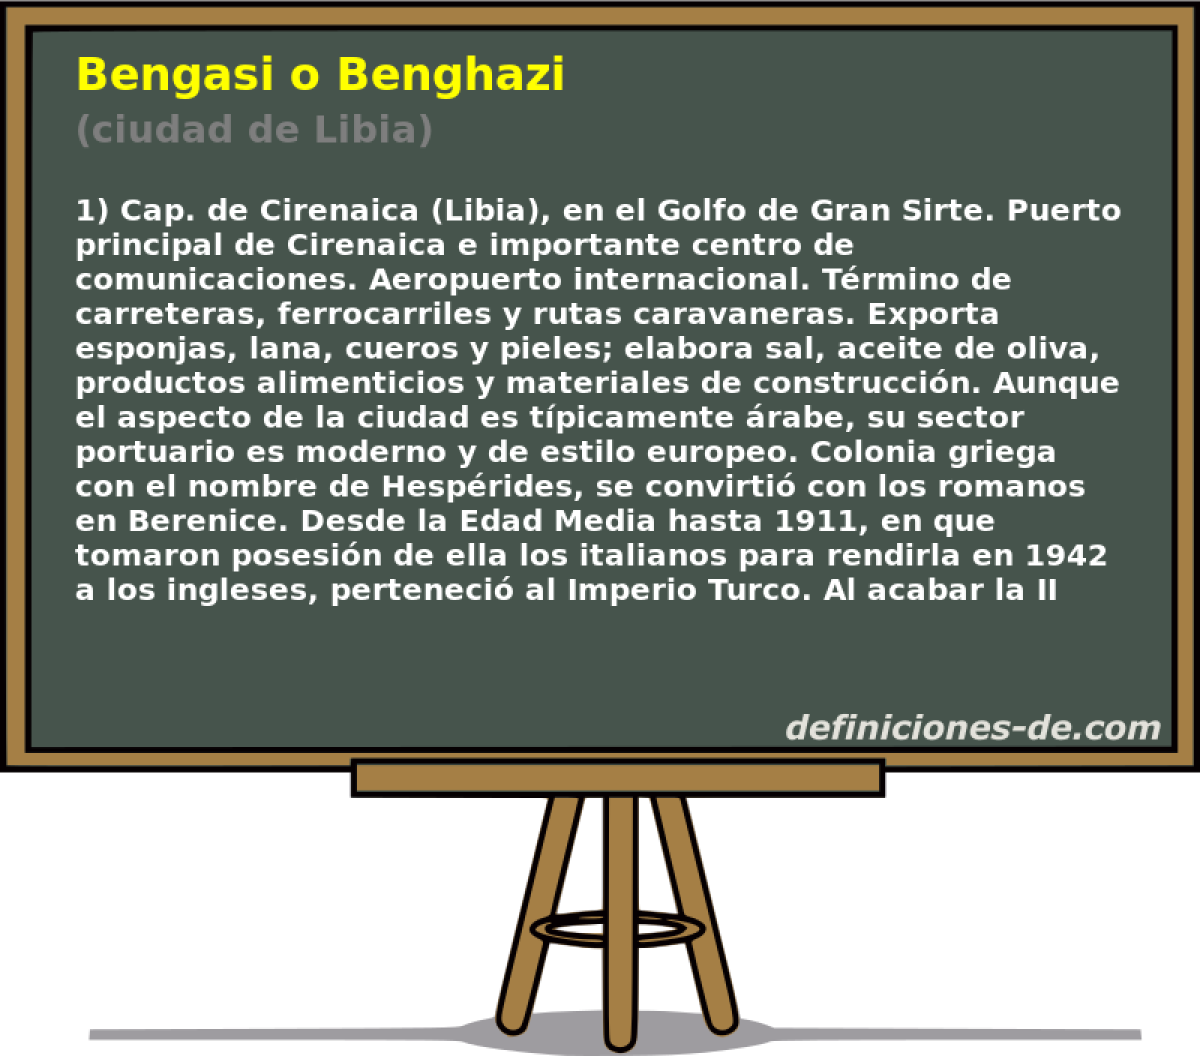 Bengasi o Benghazi (ciudad de Libia)